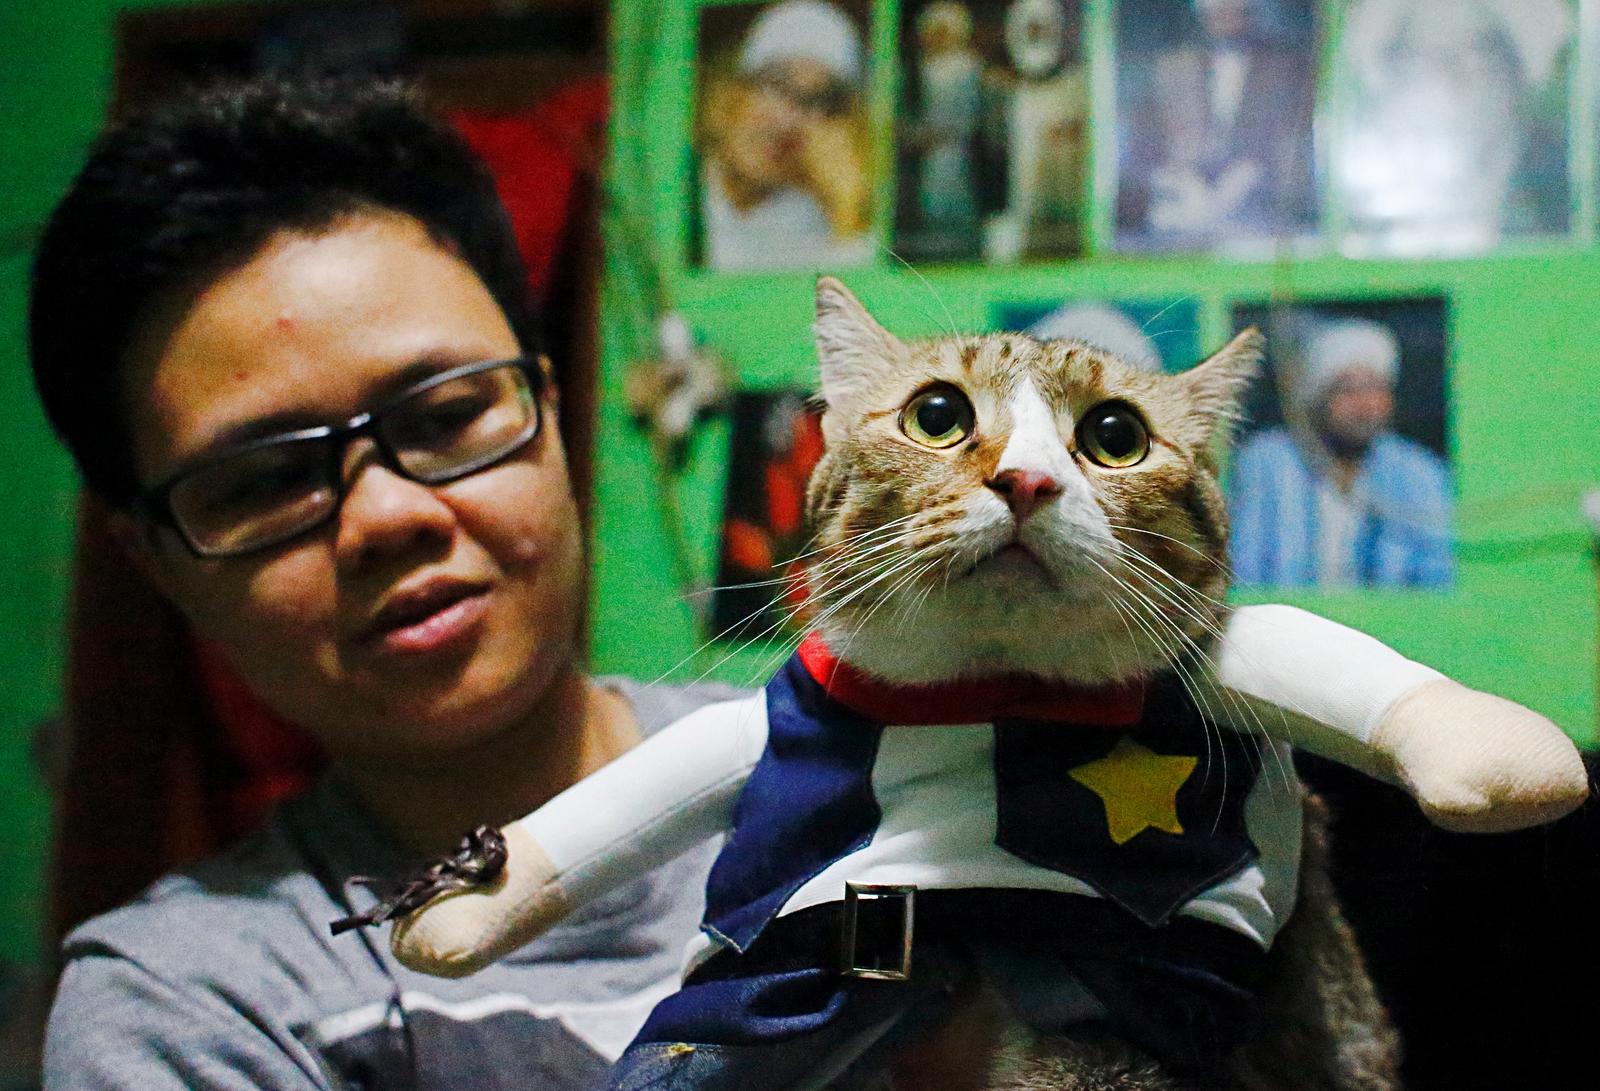 isma Sandra Irawan, 31, carries her cat wearing a cosplay costume, in Jakarta, Indonesia, November 29, 2020. Photo: Reuters